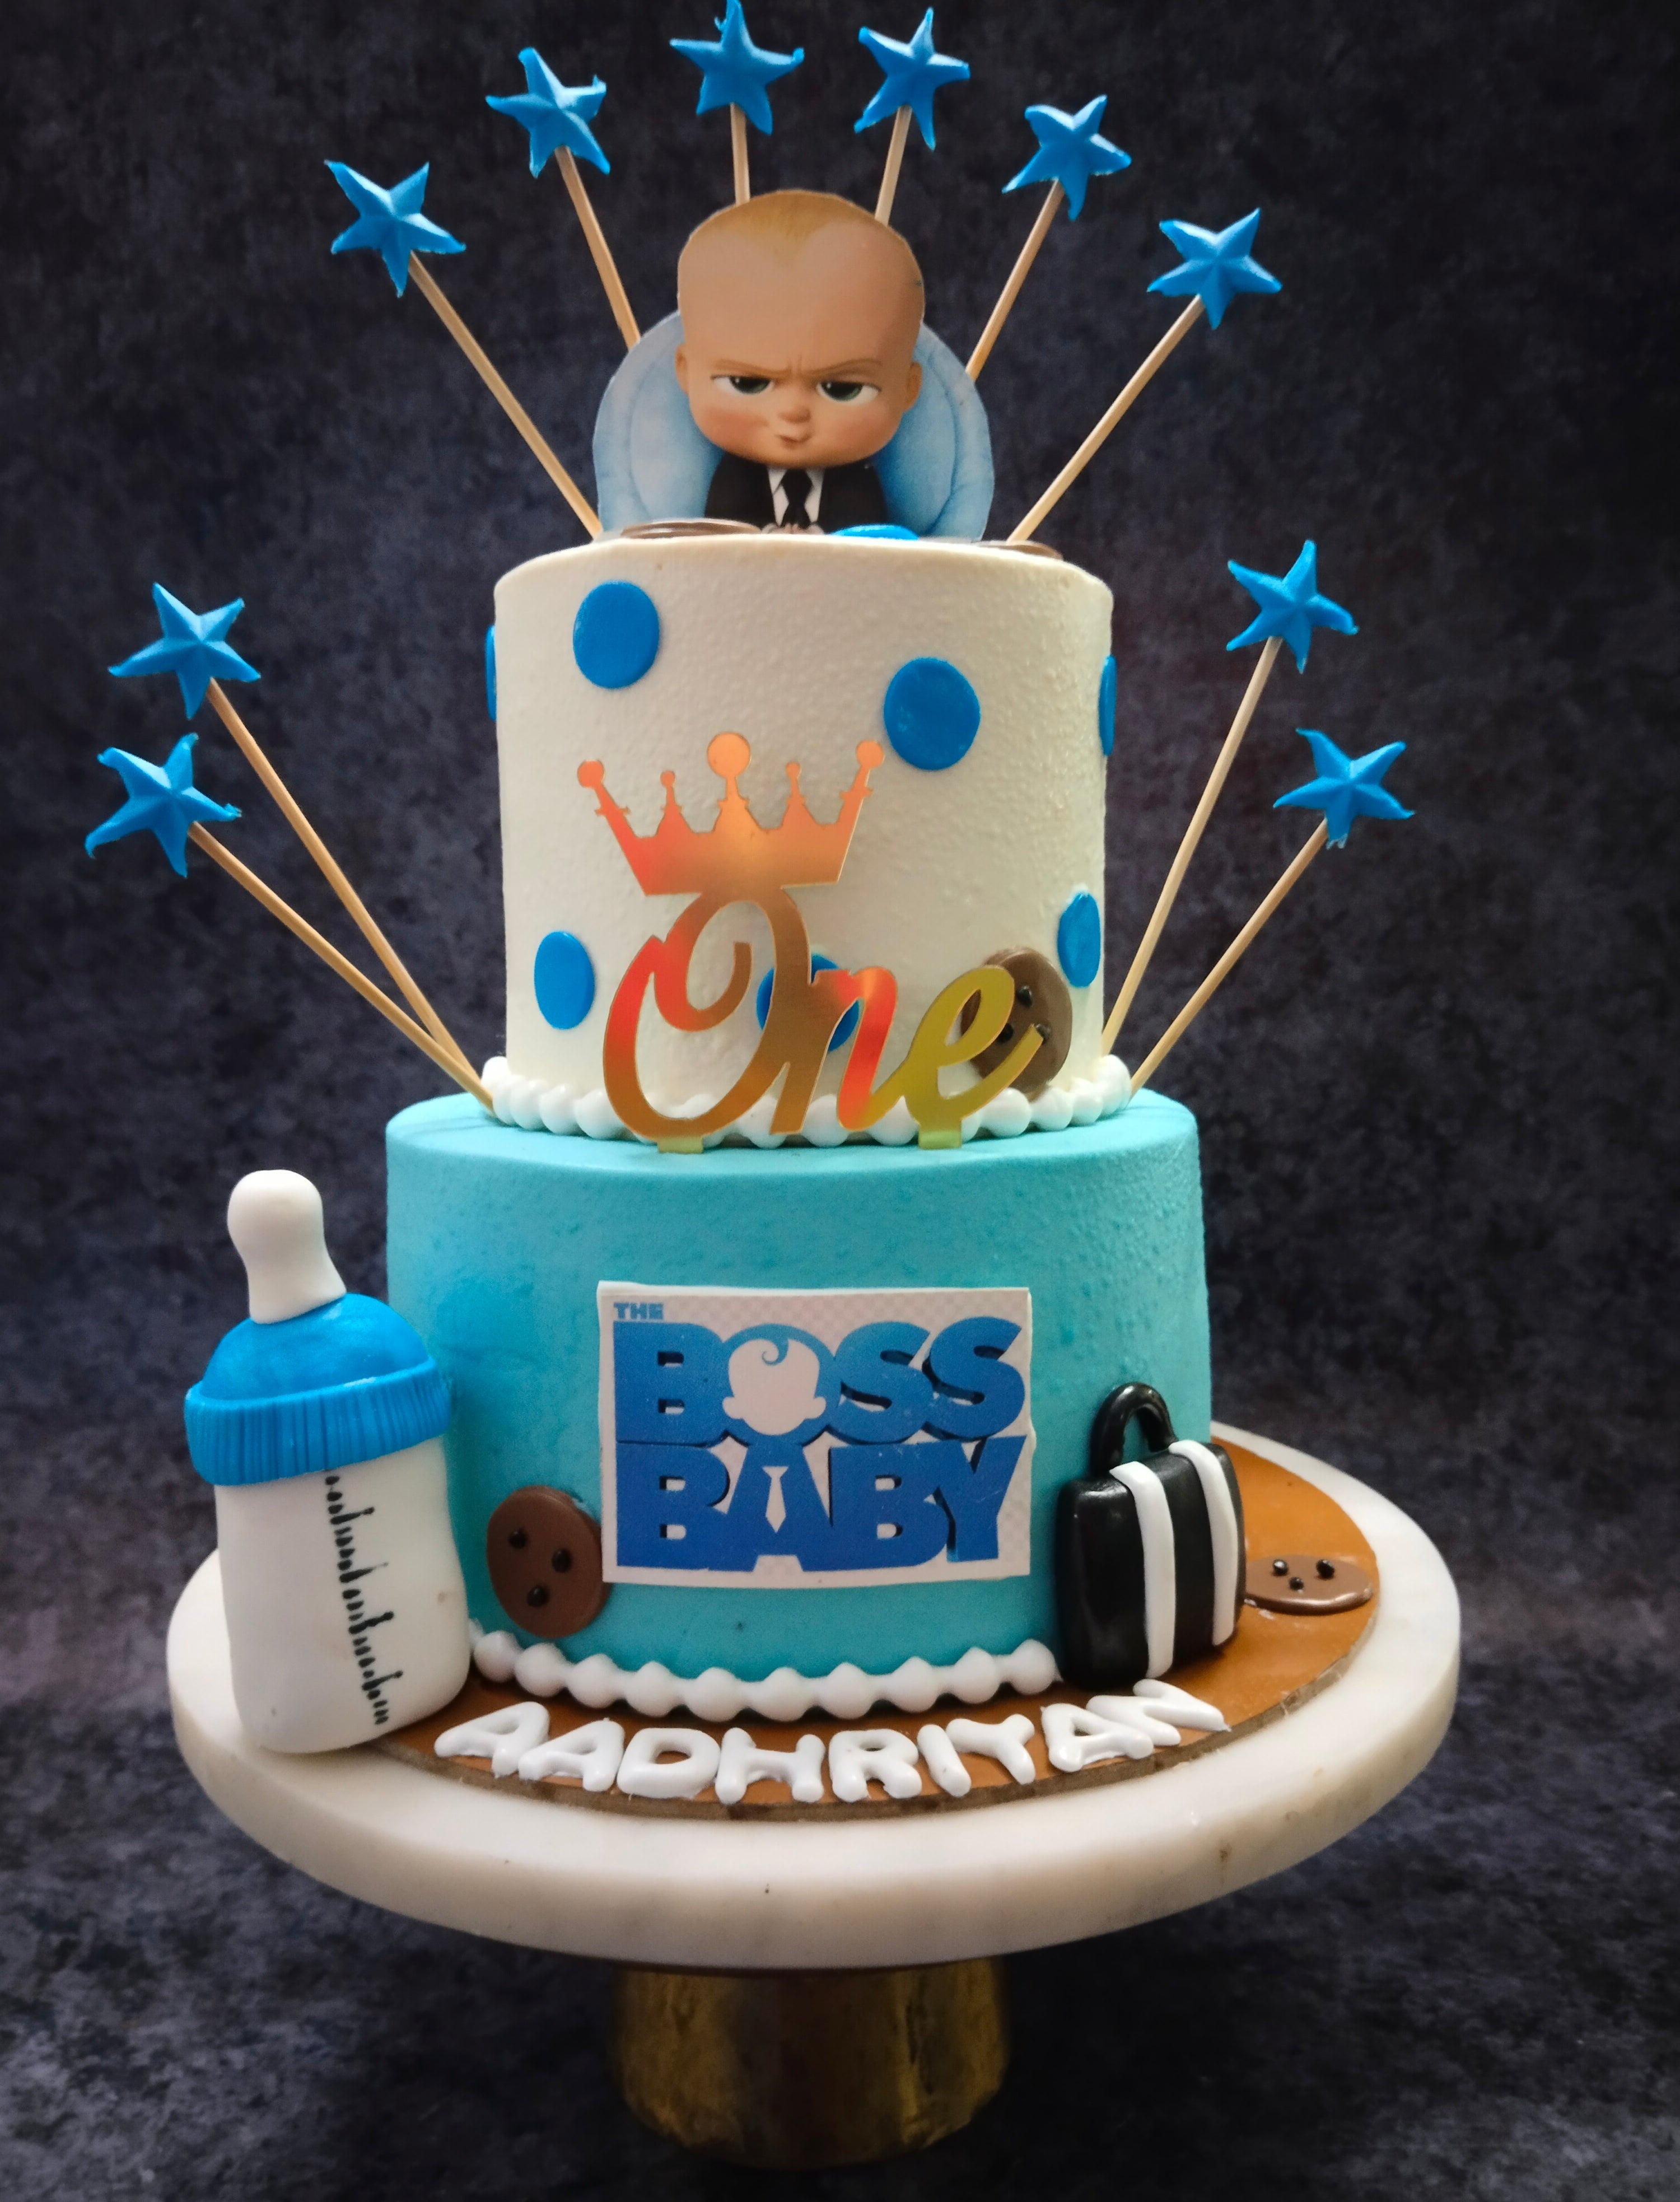 Boss Lady Heel Birthday Cake | Baked by Nataleen